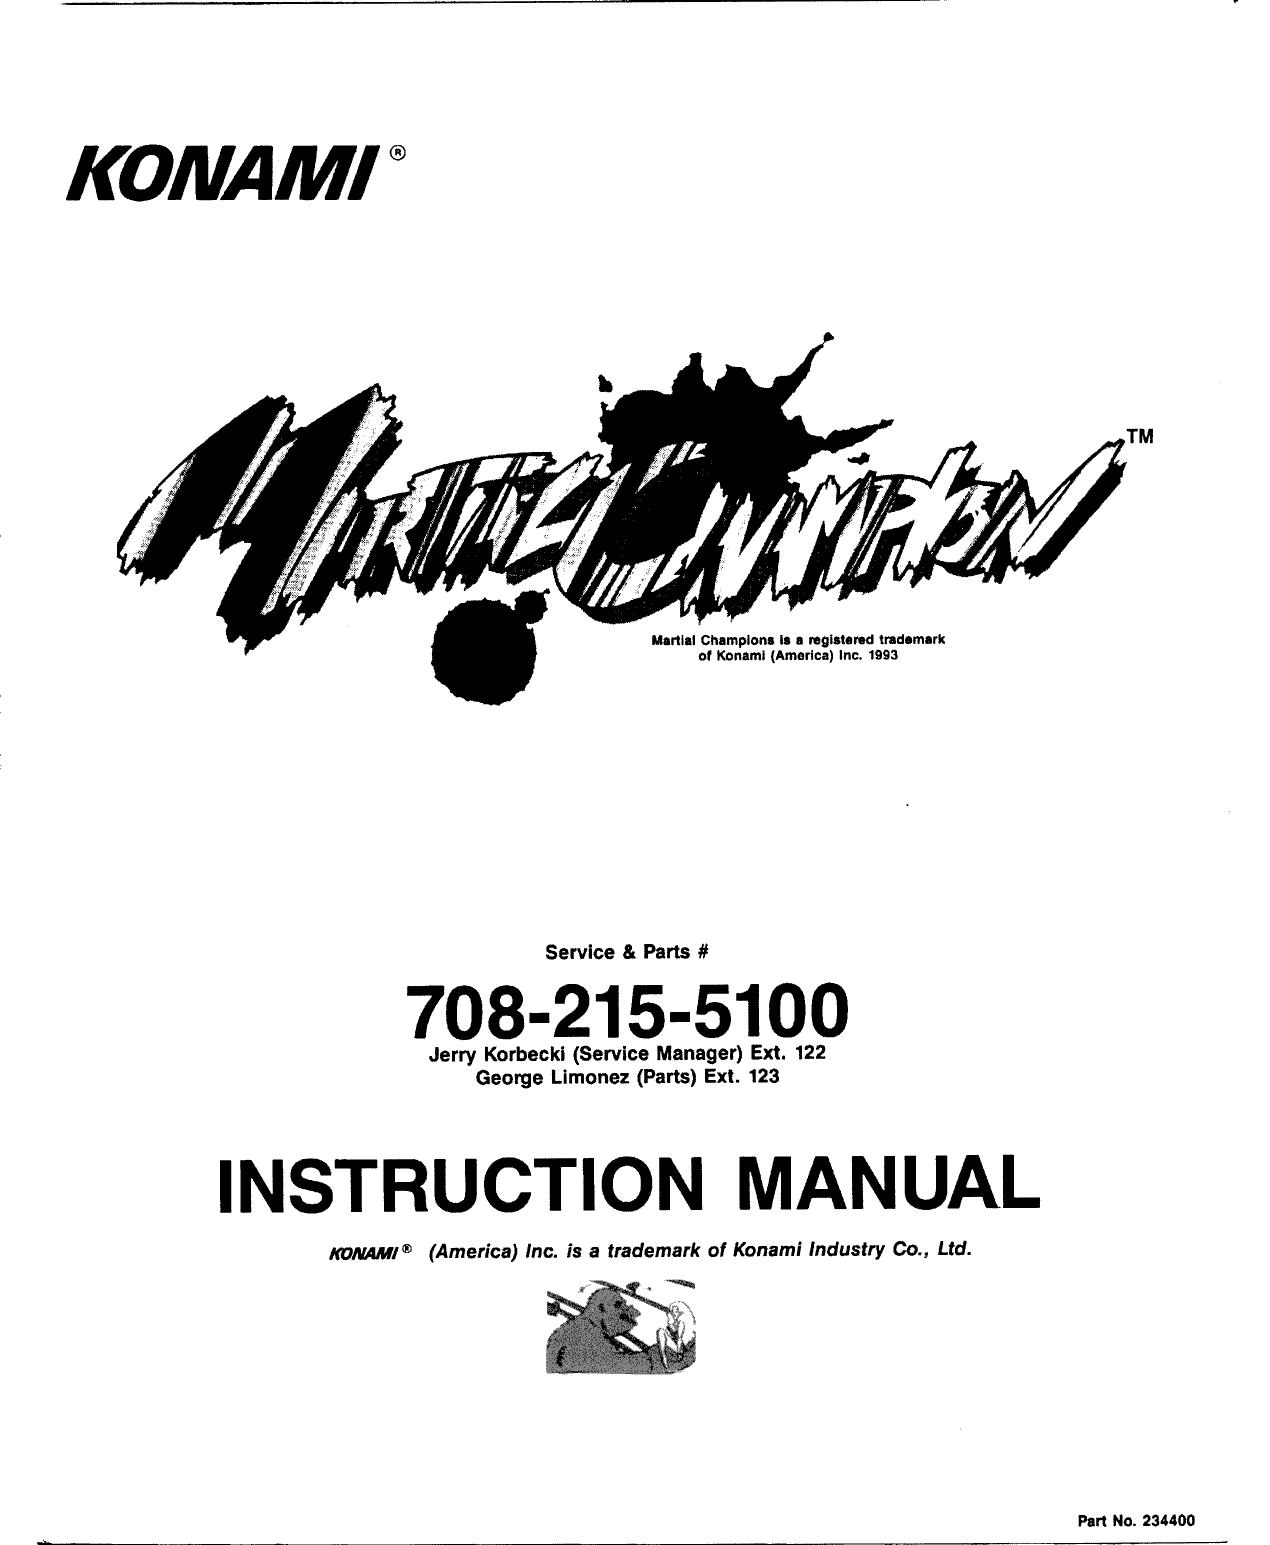 MartialChampions Manual